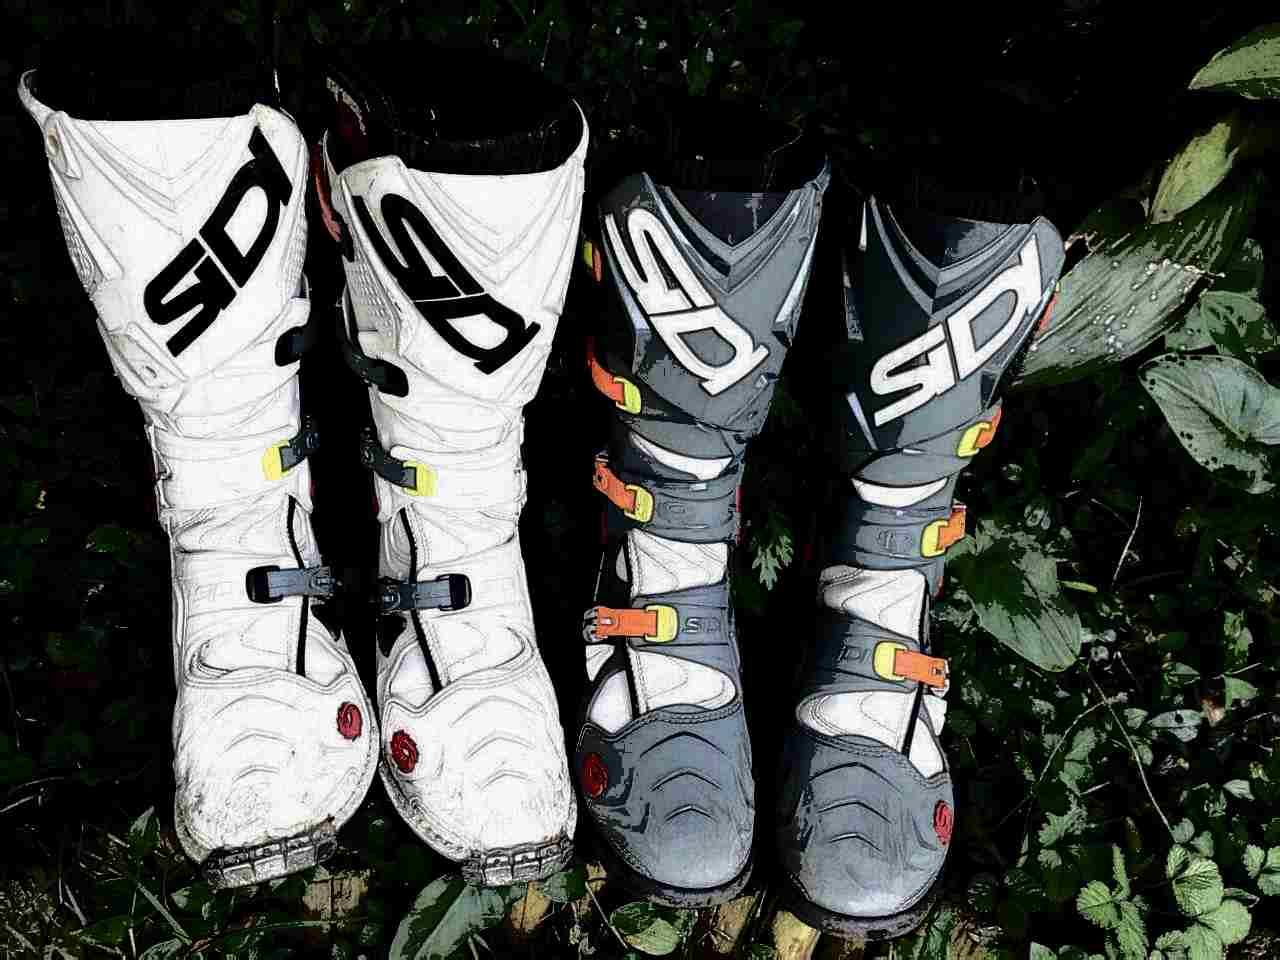 Sidi motocross boots